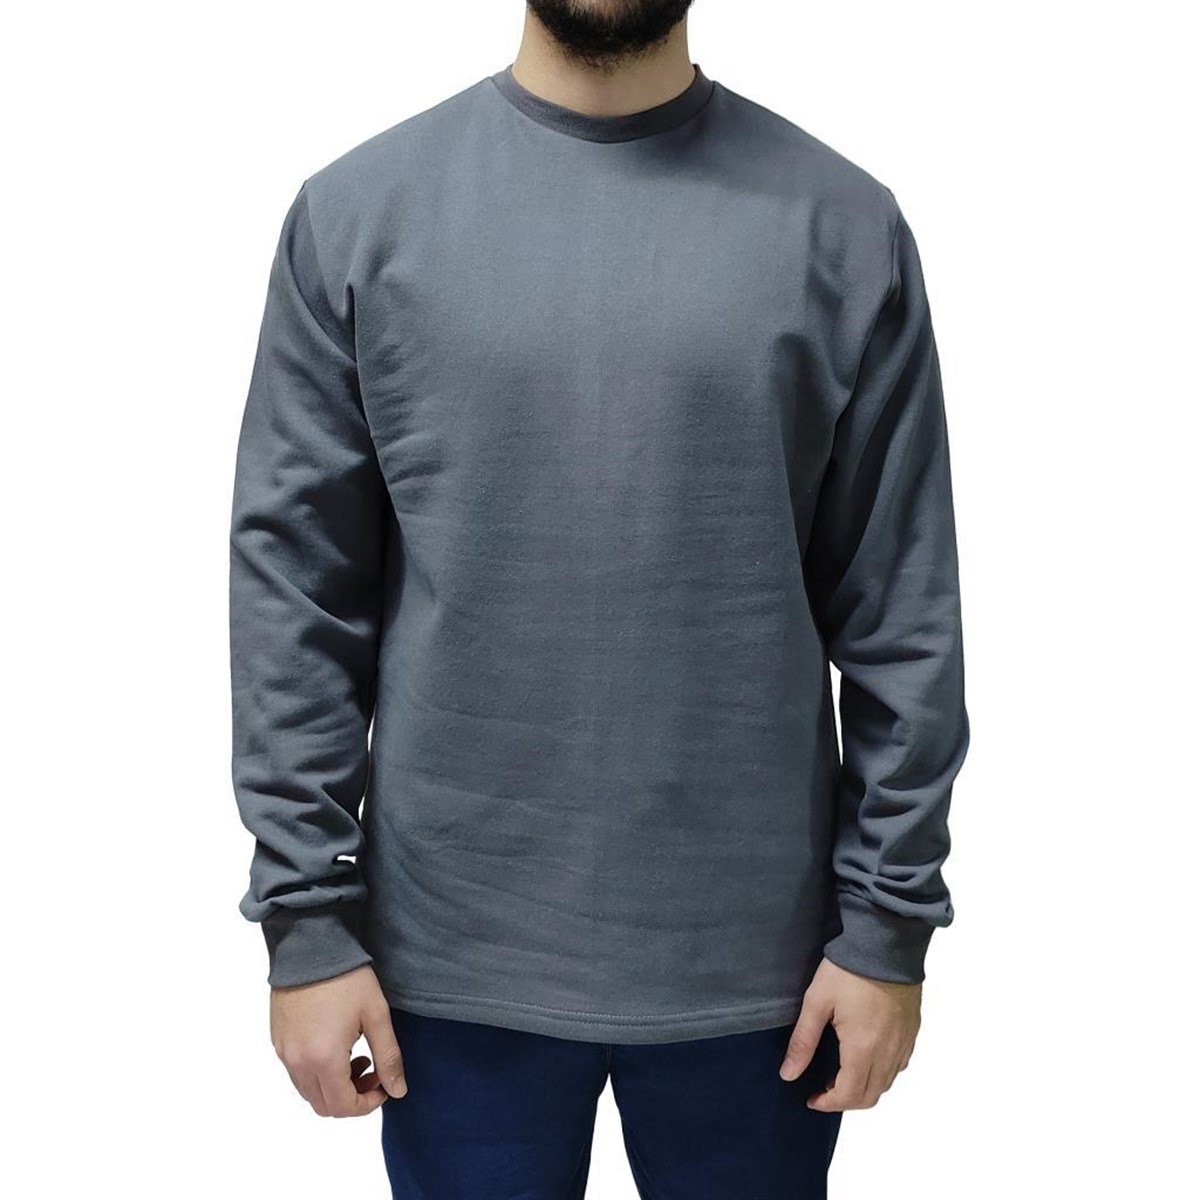 Sweatshirt, Sıfır Yaka, Gri -107E1331- Pamuklu, Kışlık